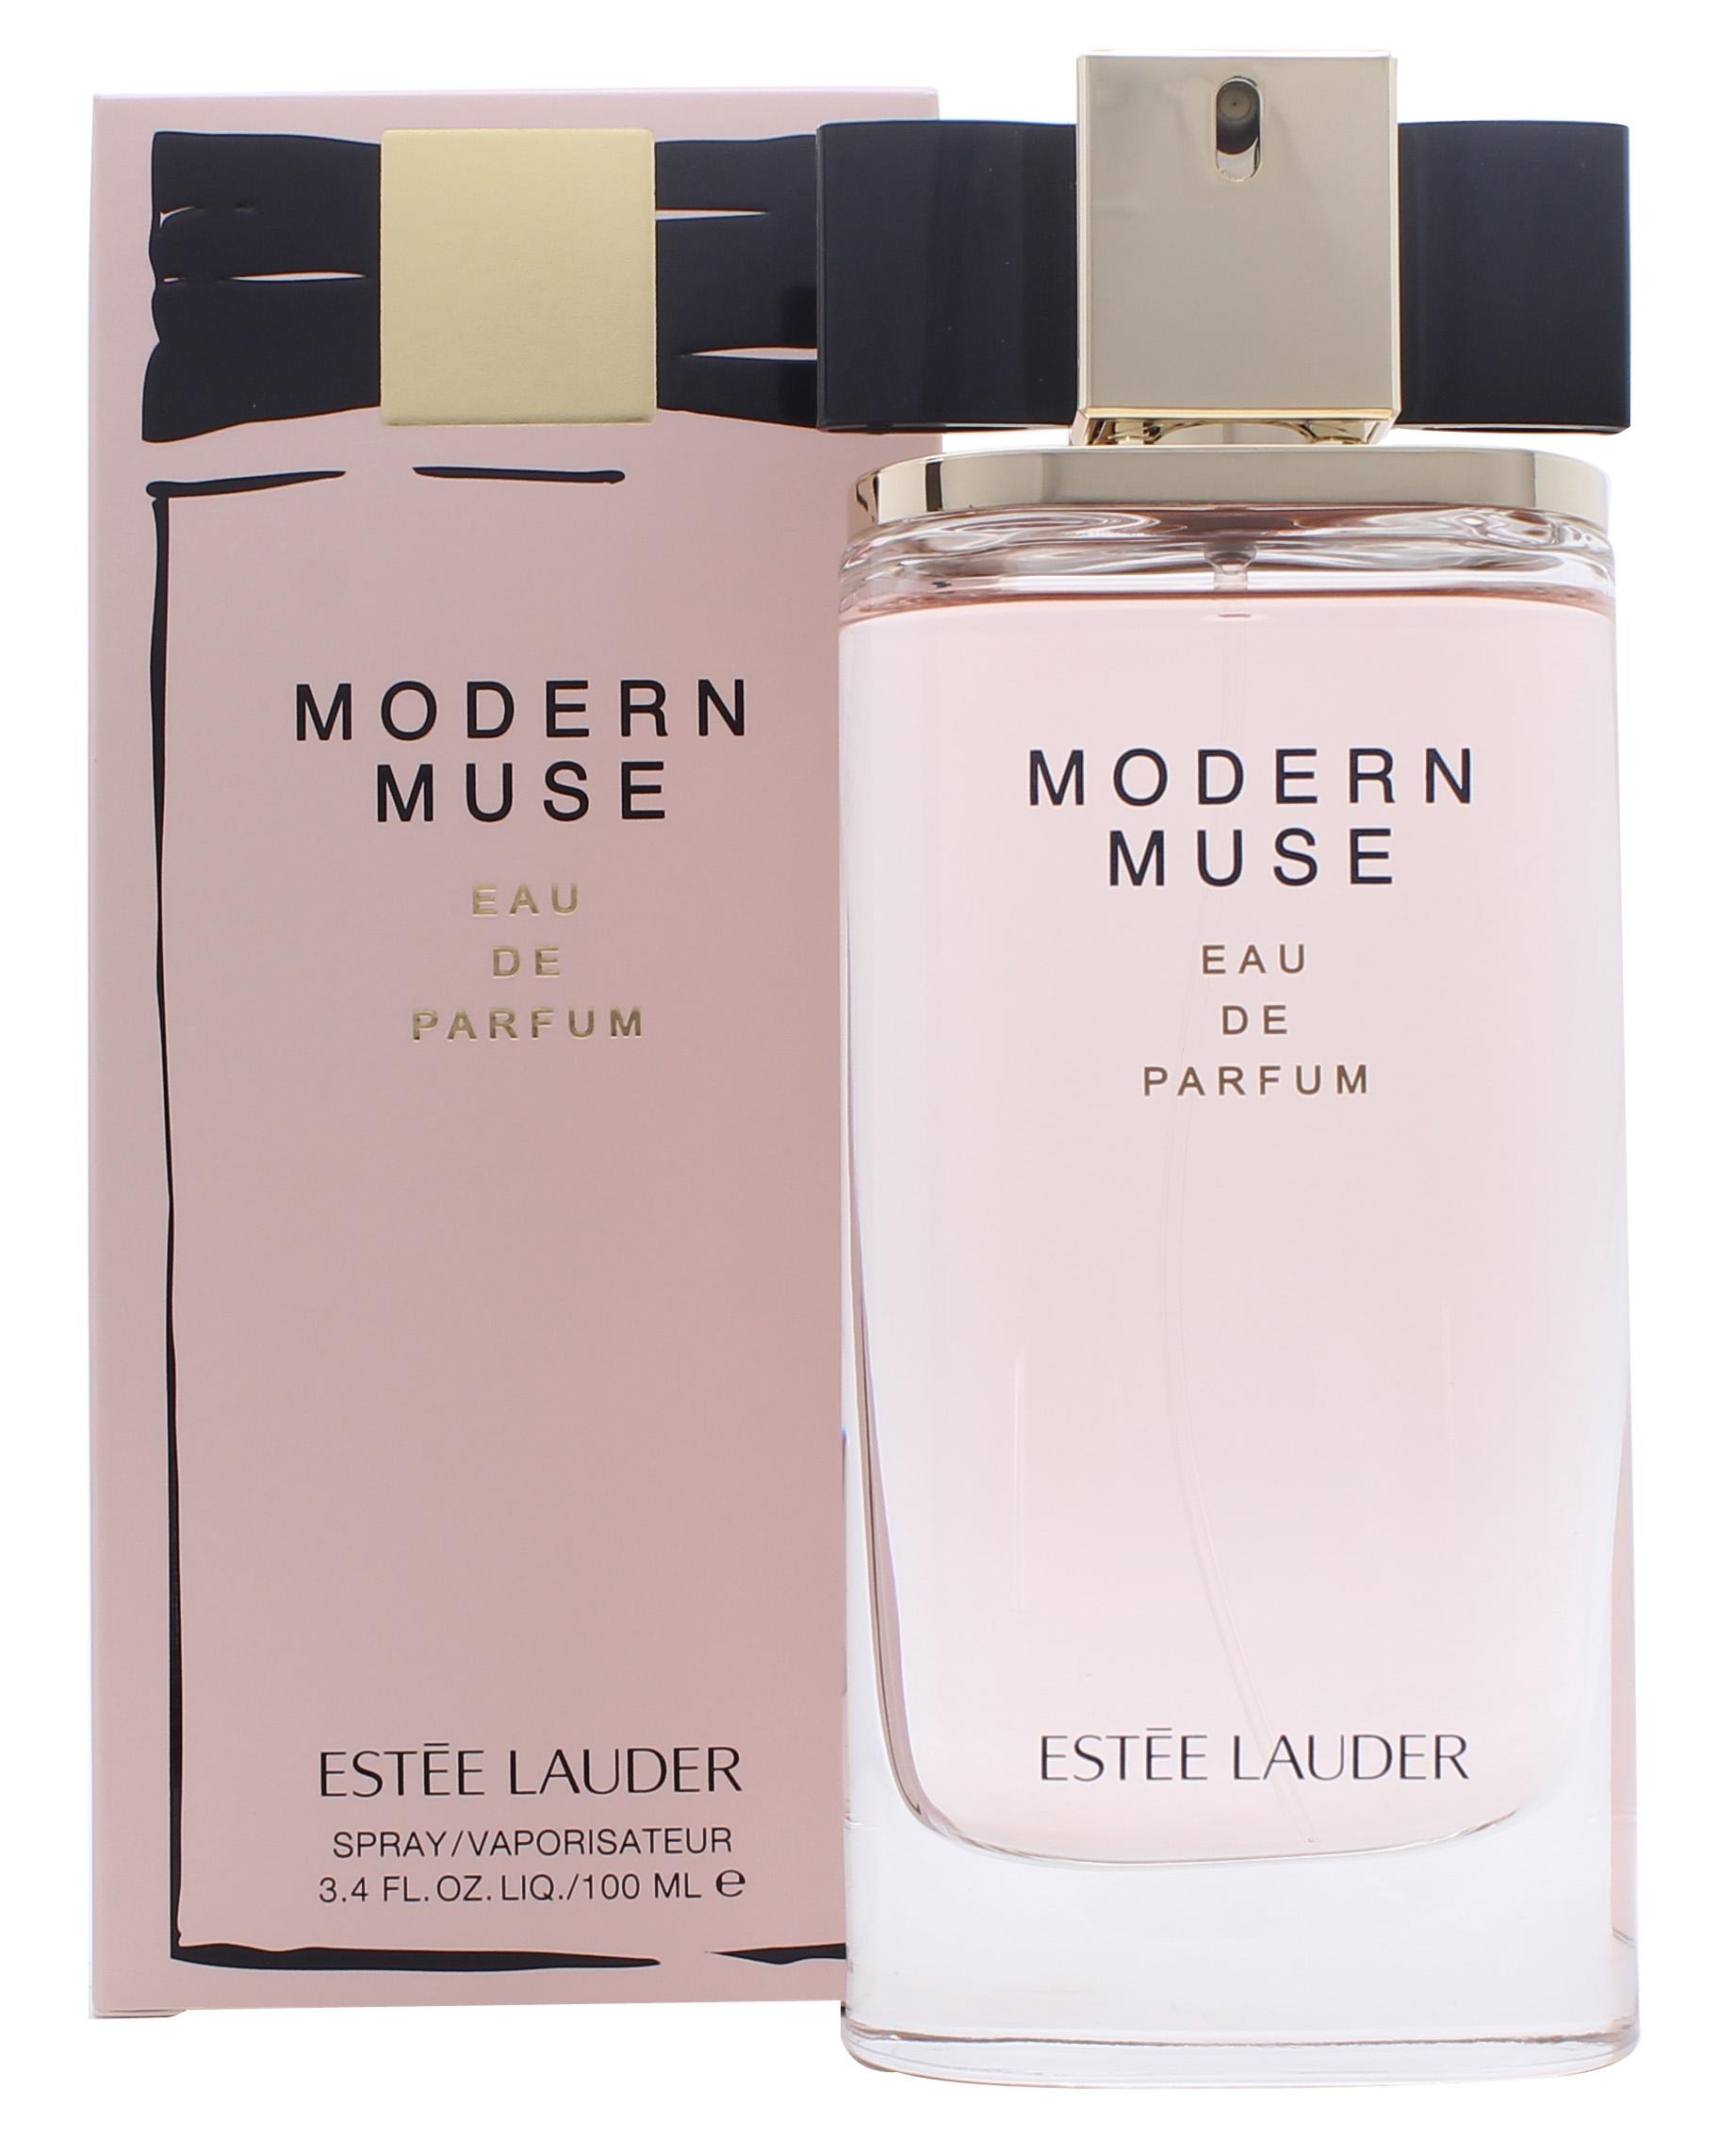 Estee Lauder Modern Muse Eau de Parfum 100ml Spray